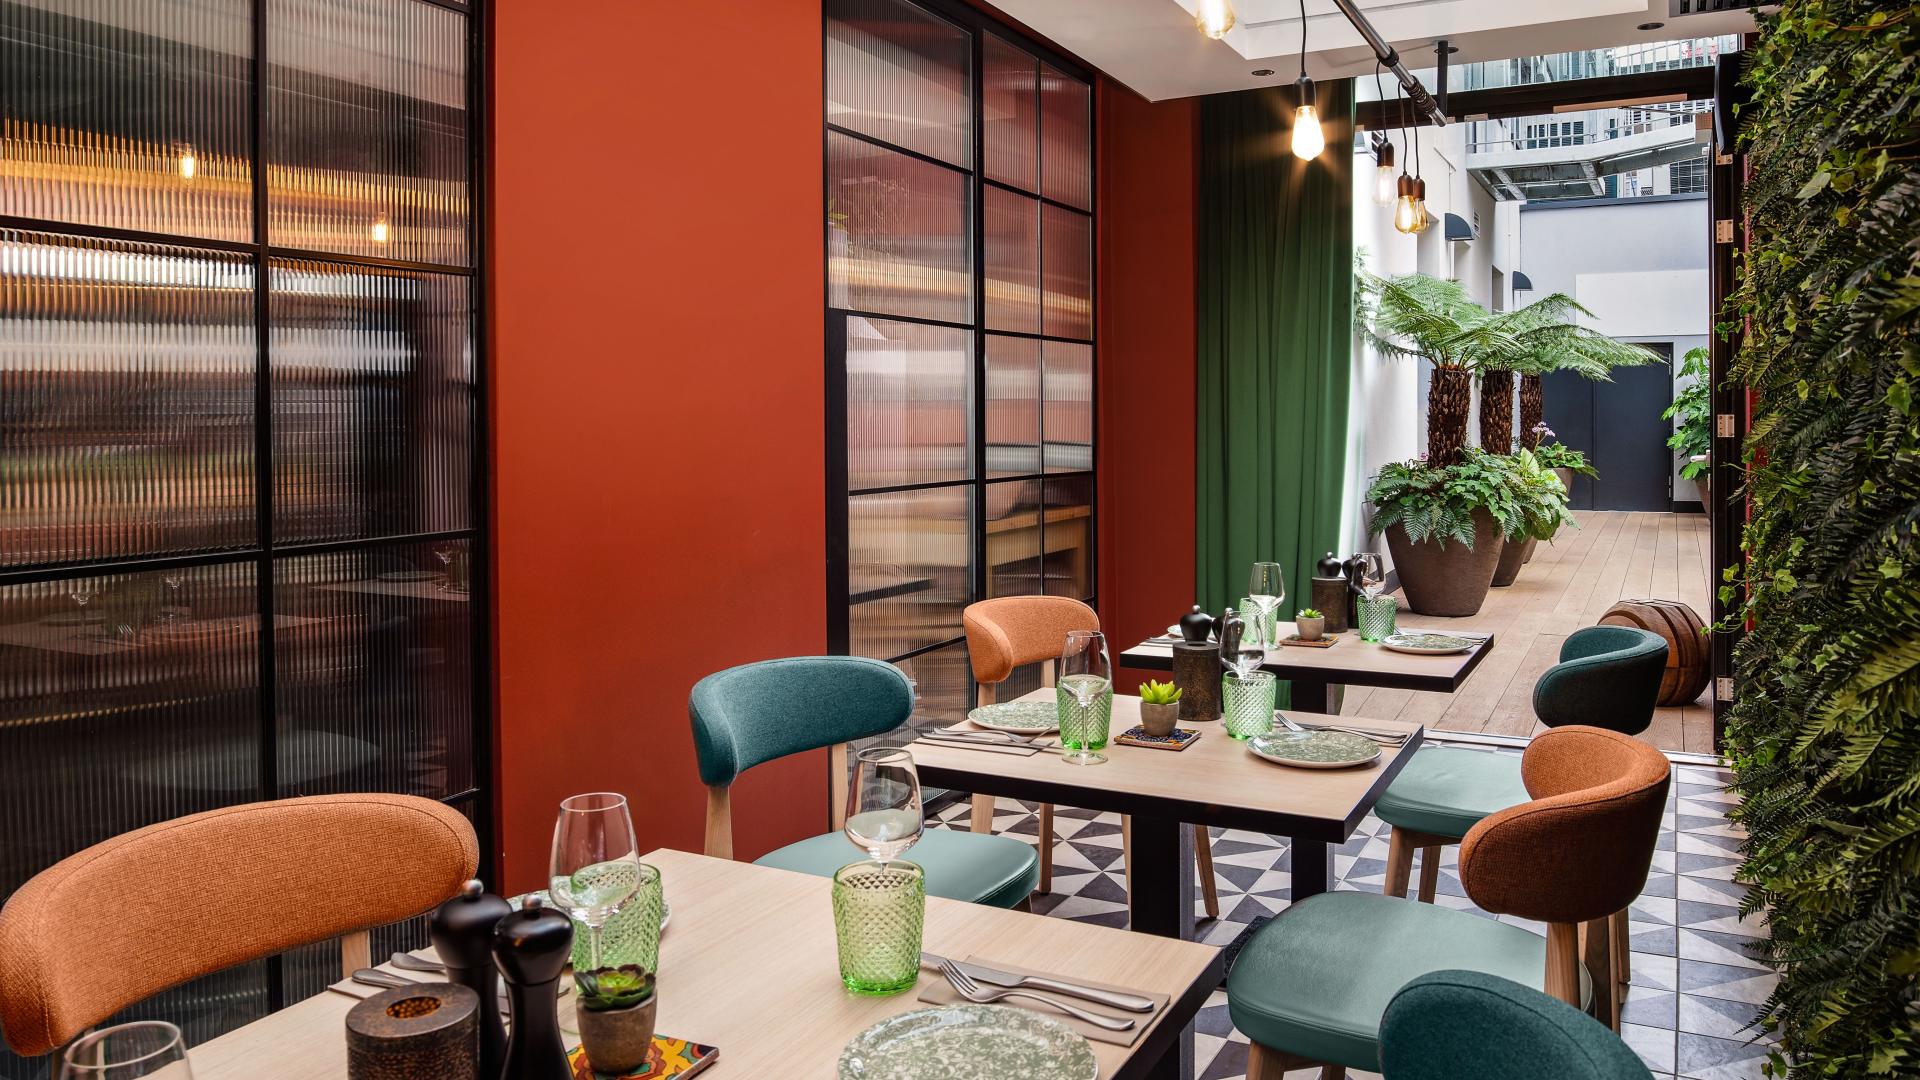 Brunch Restaurants for Hire in London